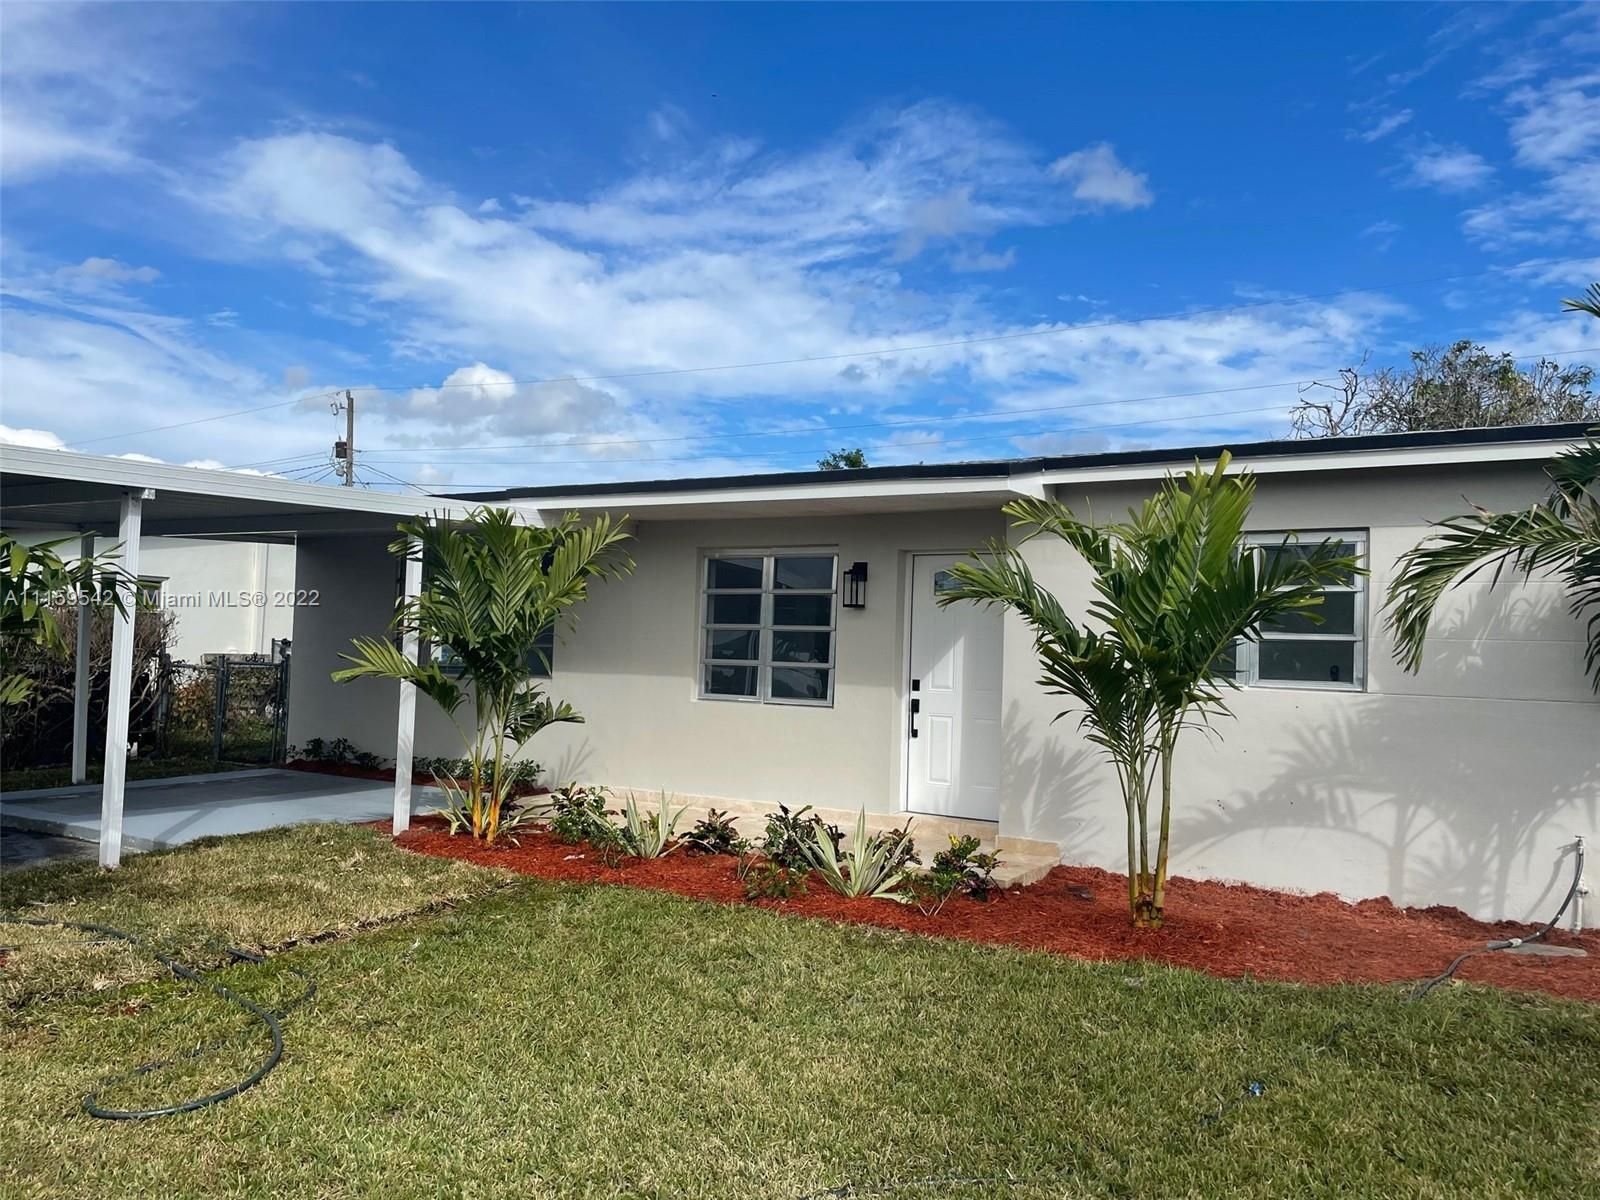 Real estate property located at 14715 104th Pl, Miami-Dade County, Miami, FL